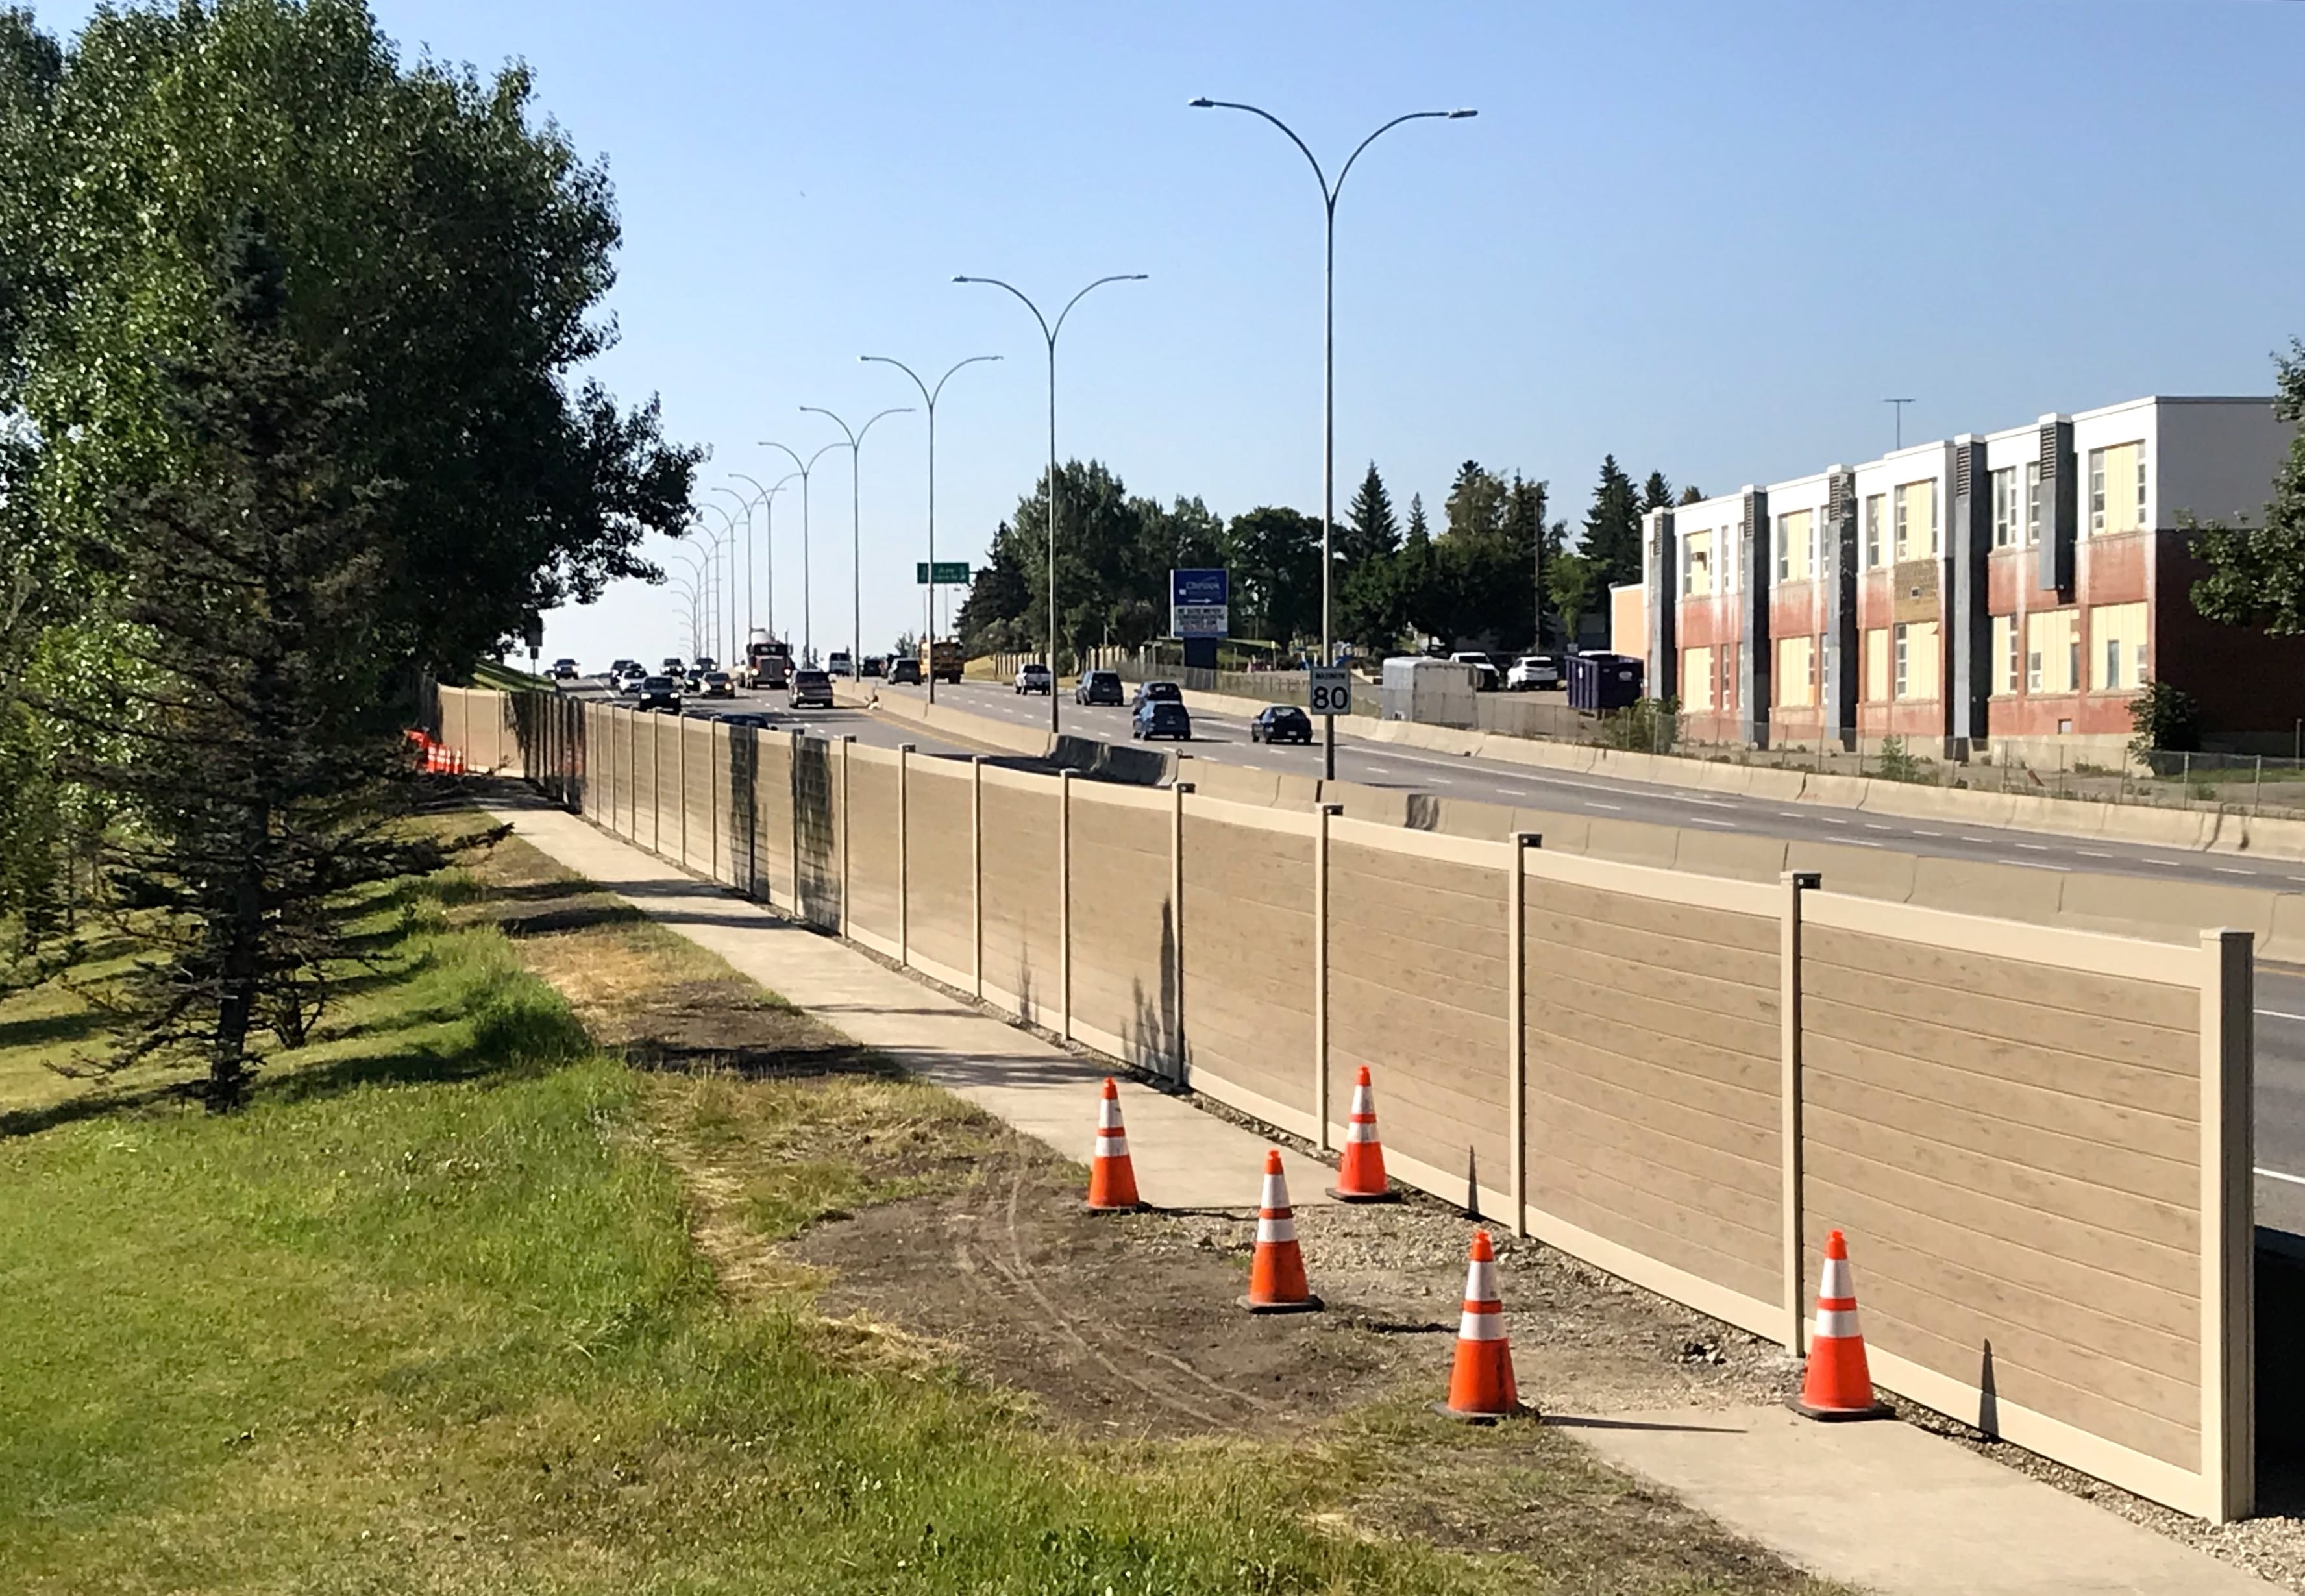 Wider sidewalk view of Calgary highway sound barrier wall